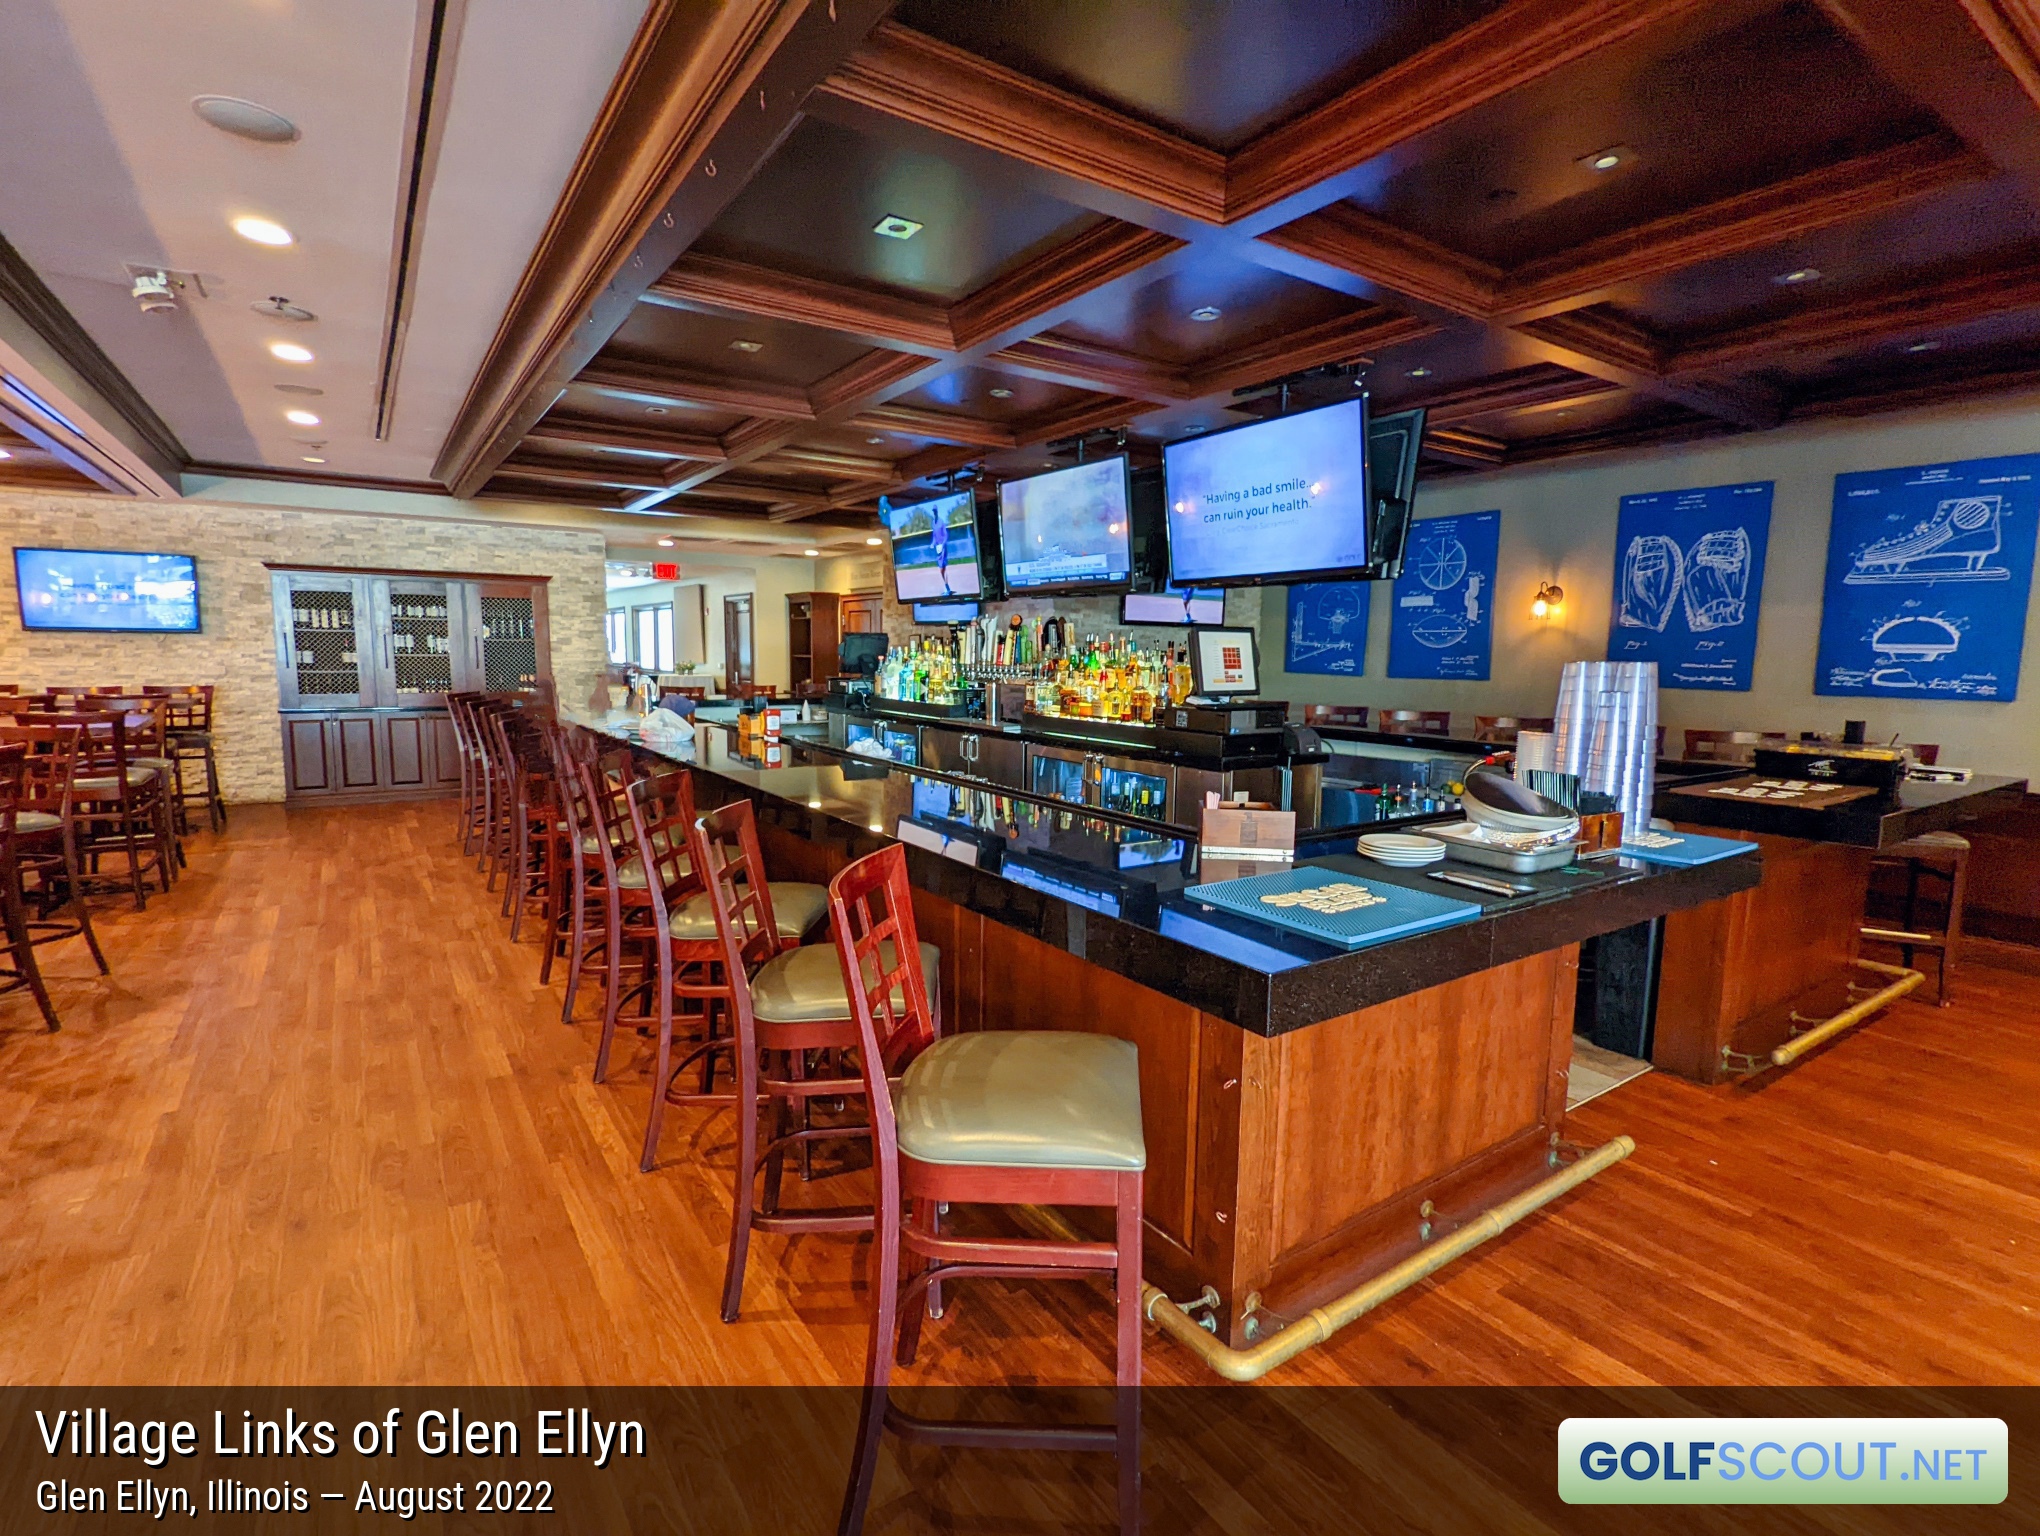 Photo of the restaurant at Village Links of Glen Ellyn - 18 Hole Course in Glen Ellyn, Illinois. 